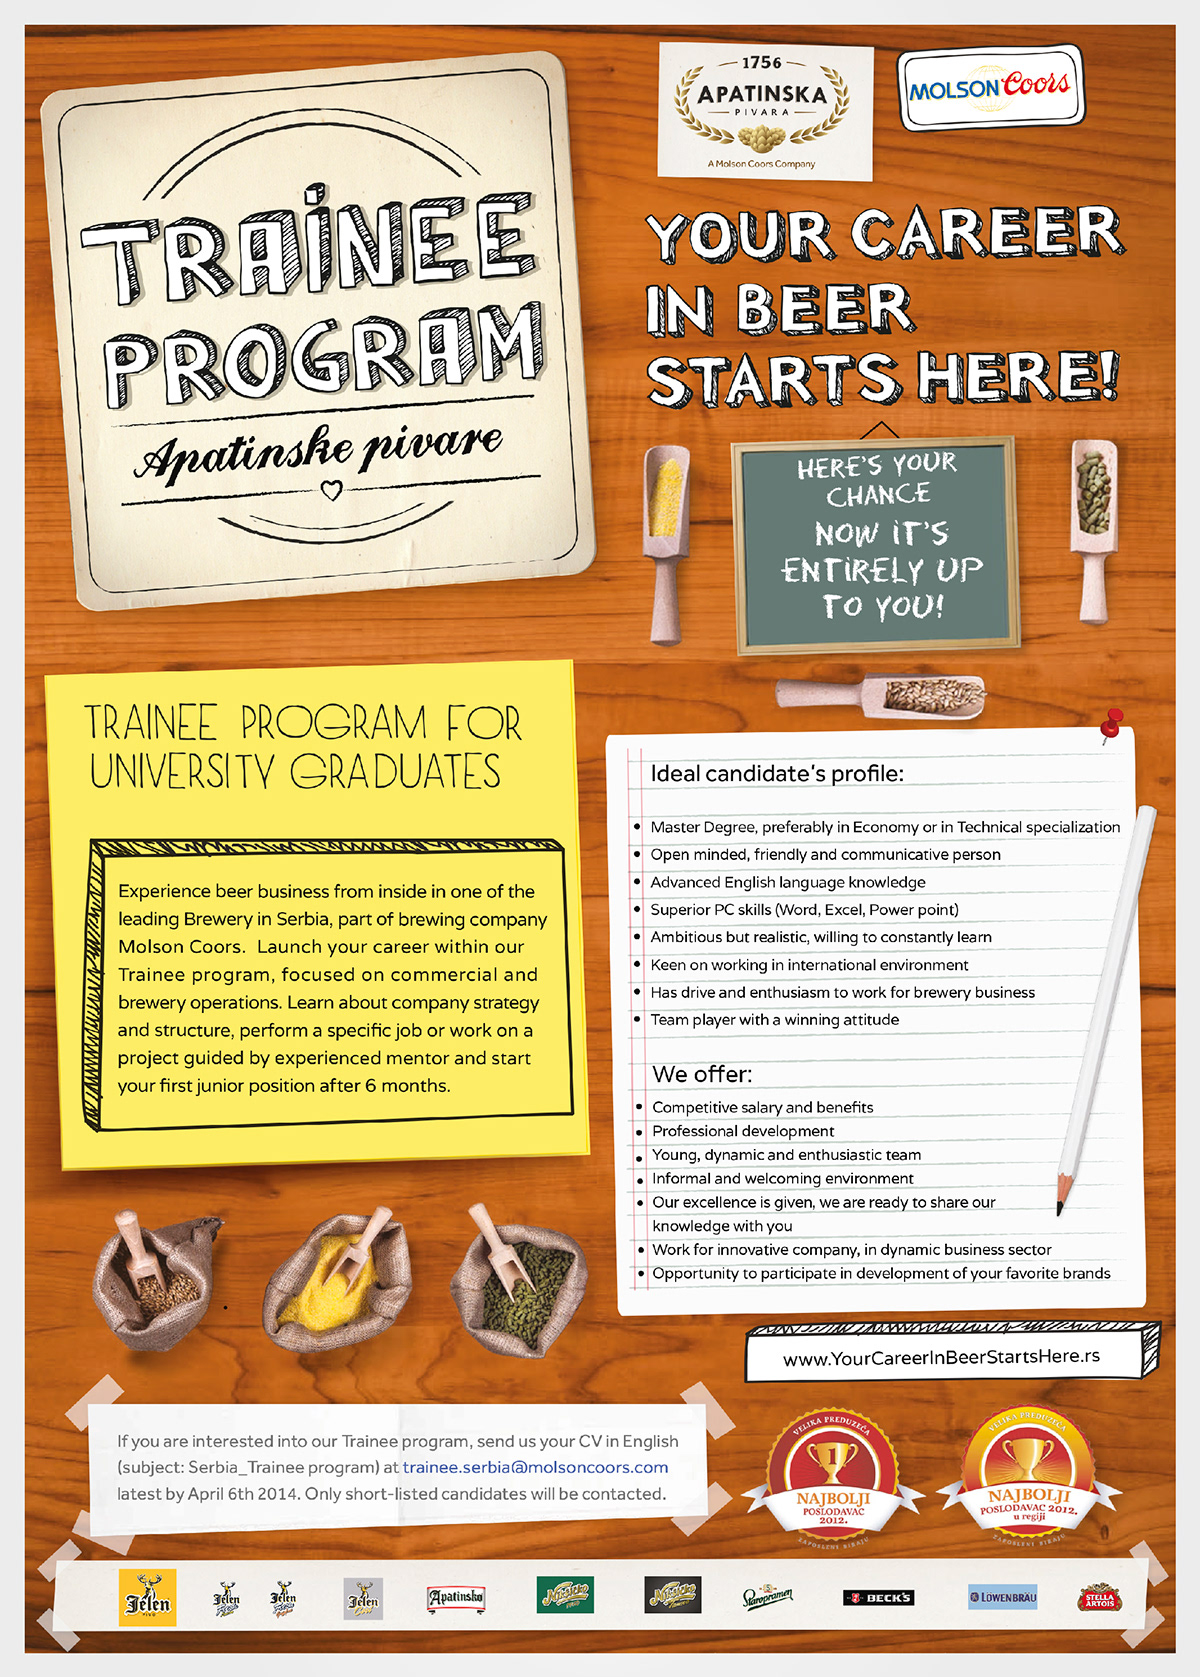 job trainee internship Employment beer brewery career Stand leaflet brochure ad Fair expo banner creative